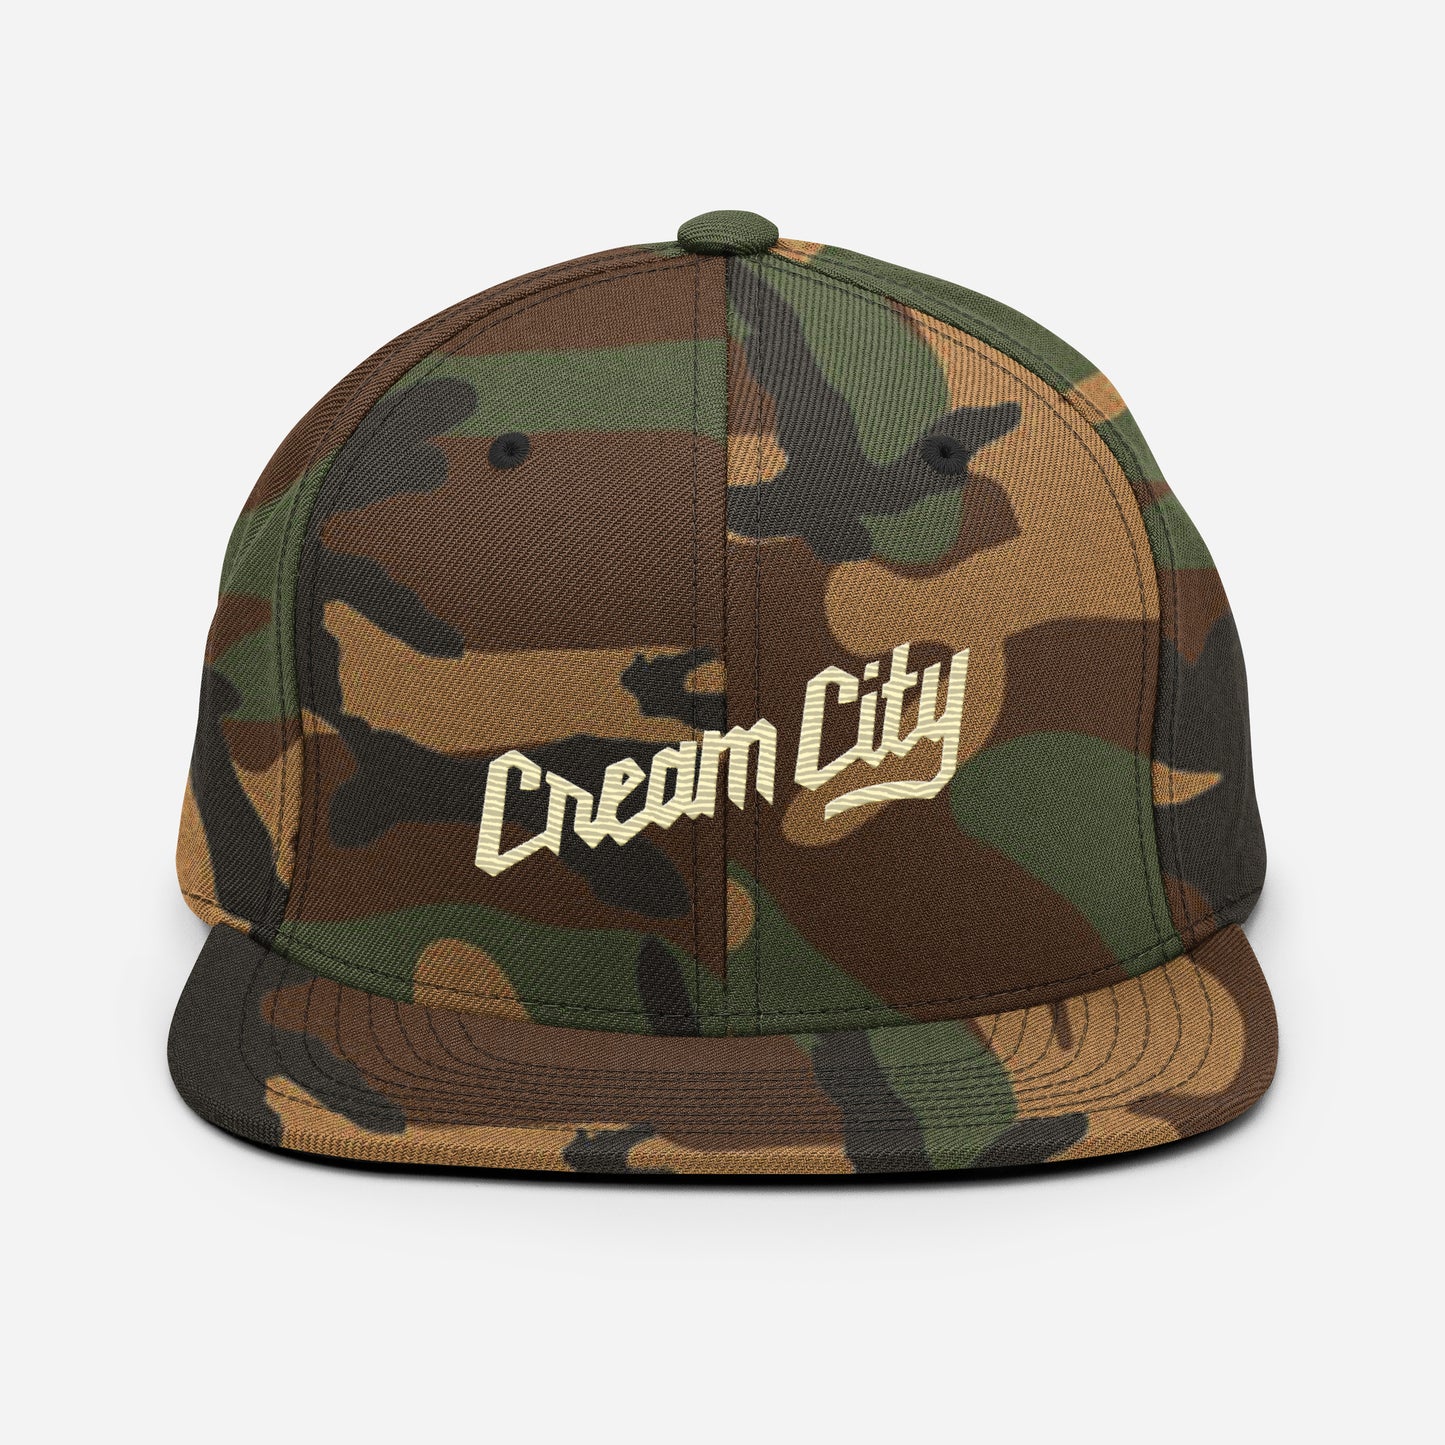 Cream City Snapback Cap